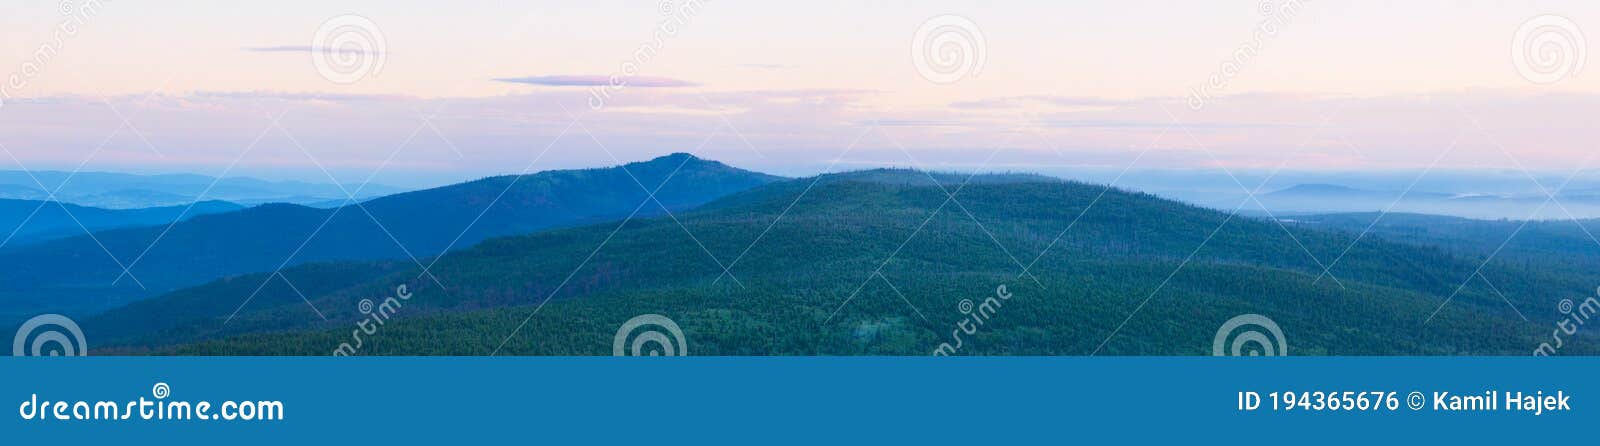 panorama of rachel mountain in the morning